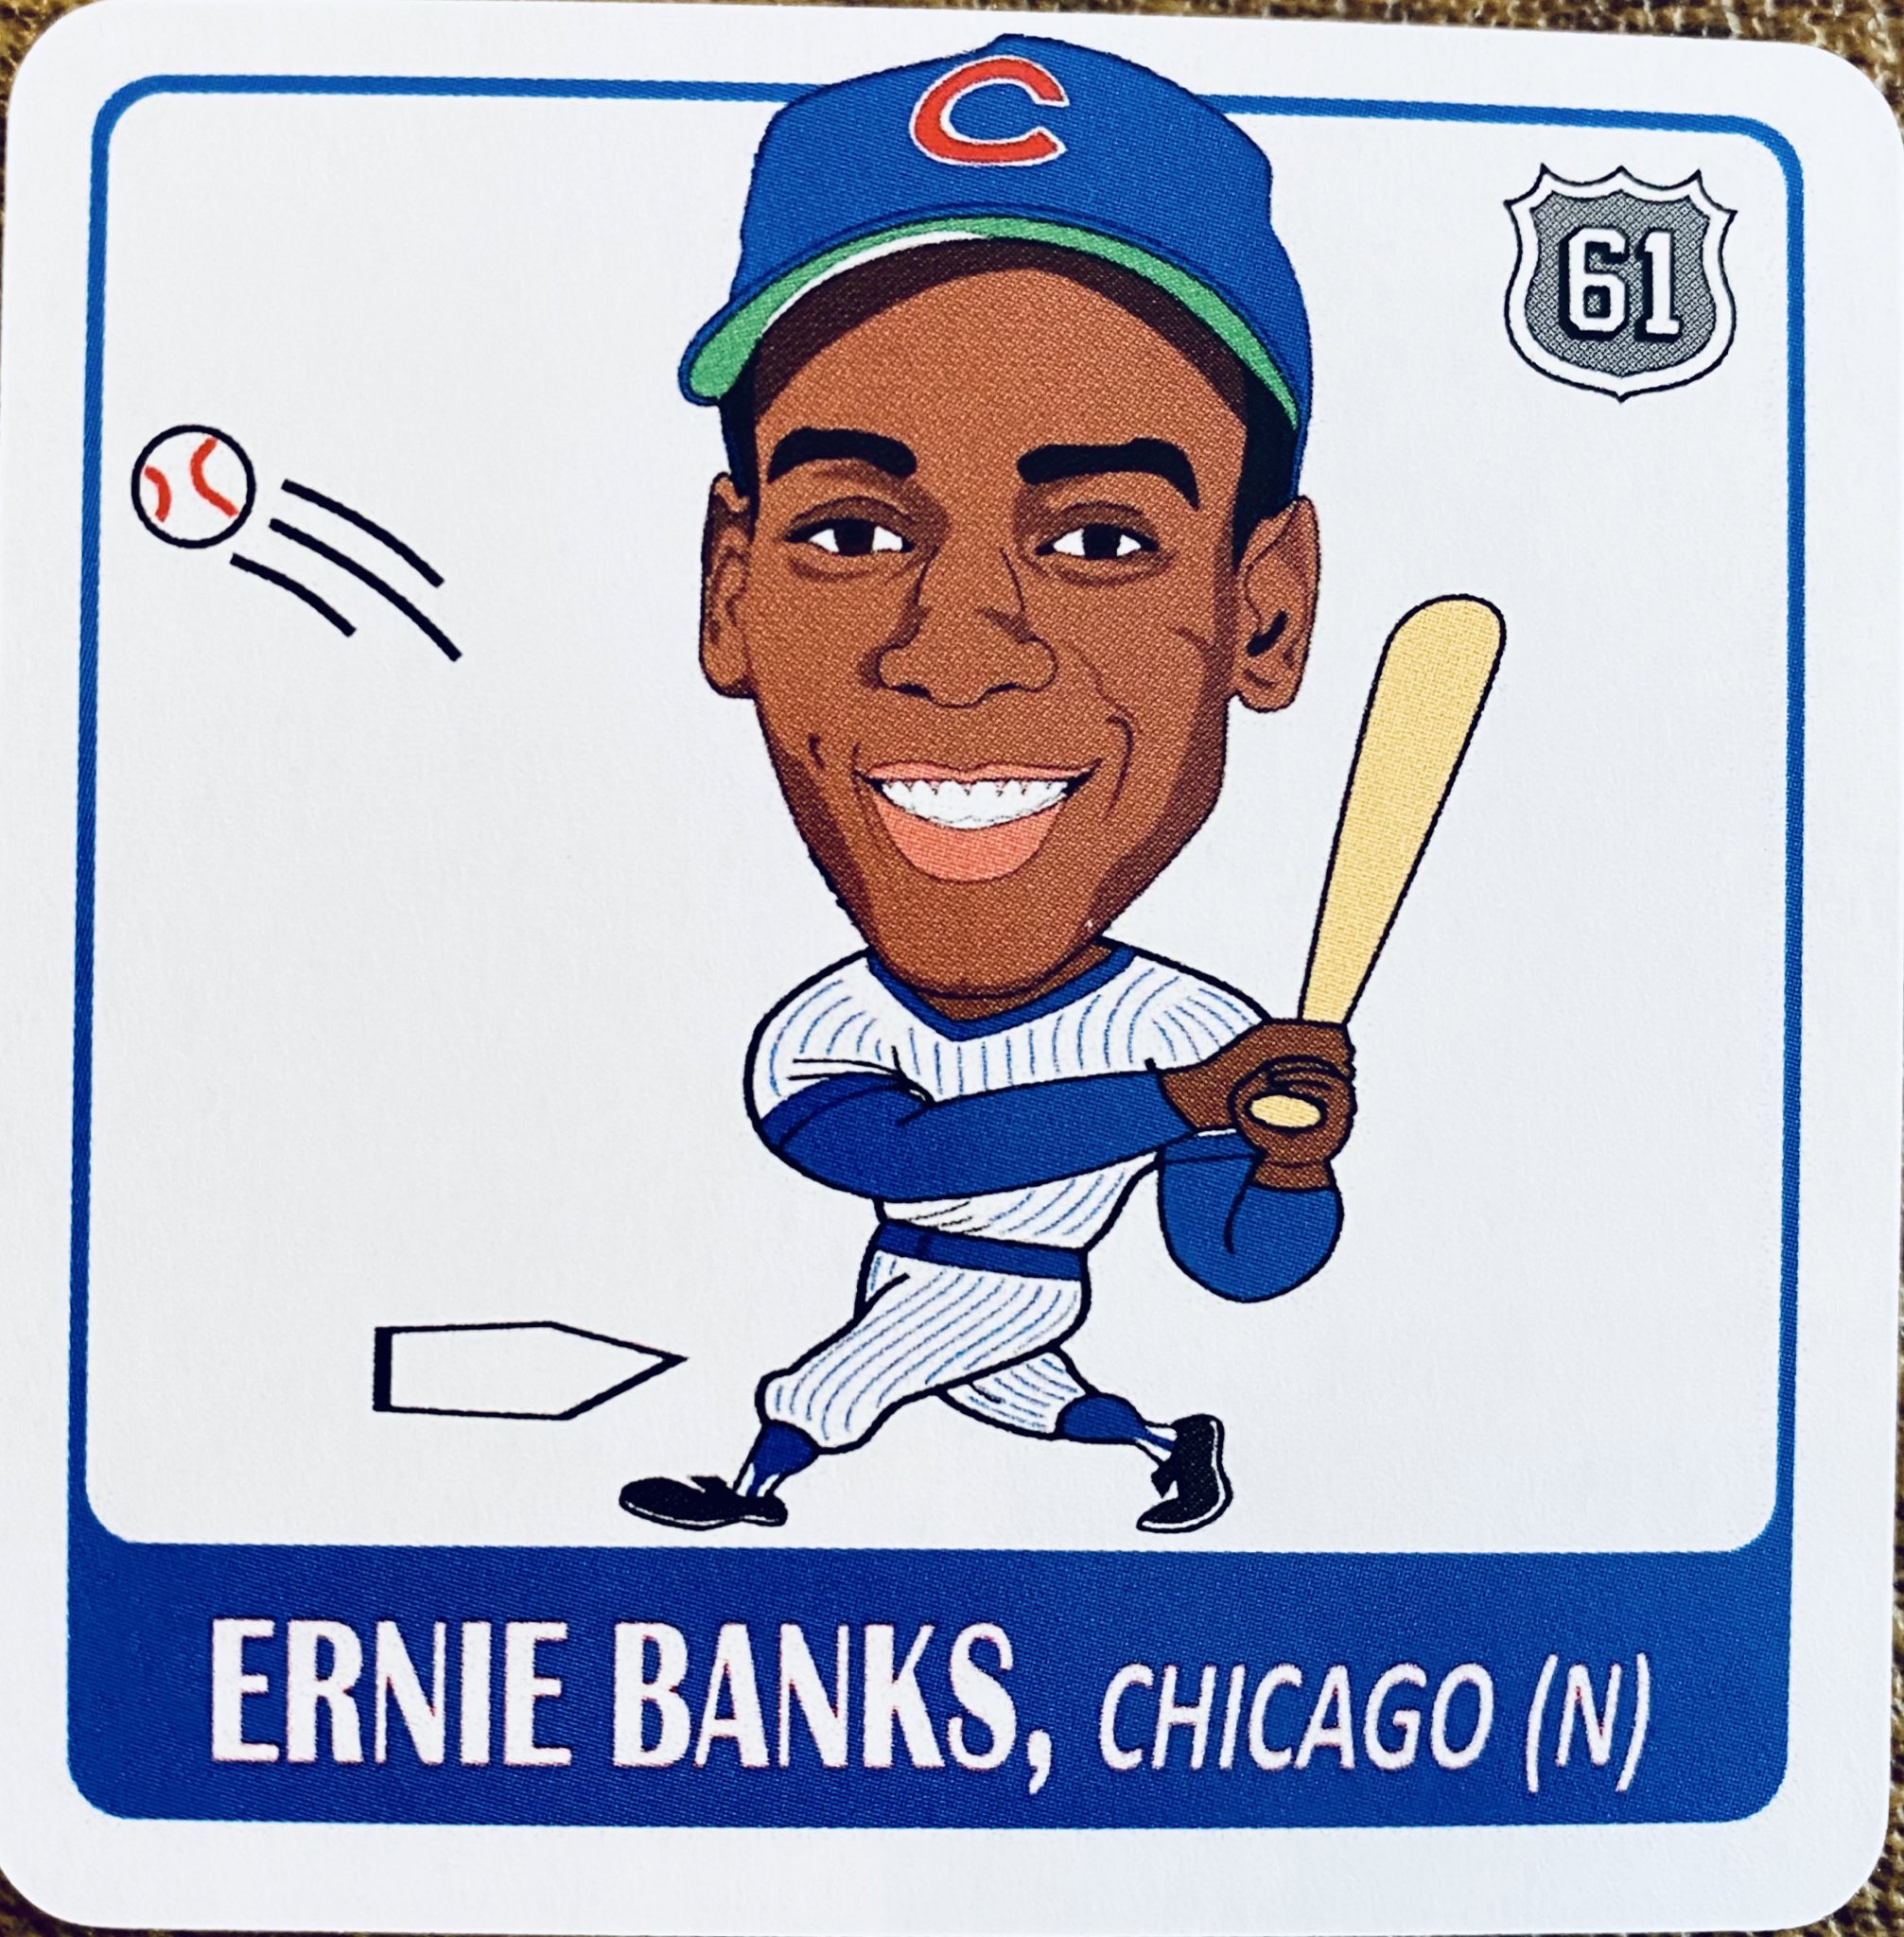 Happy birthday to Mr. Cub, Ernie Banks! 